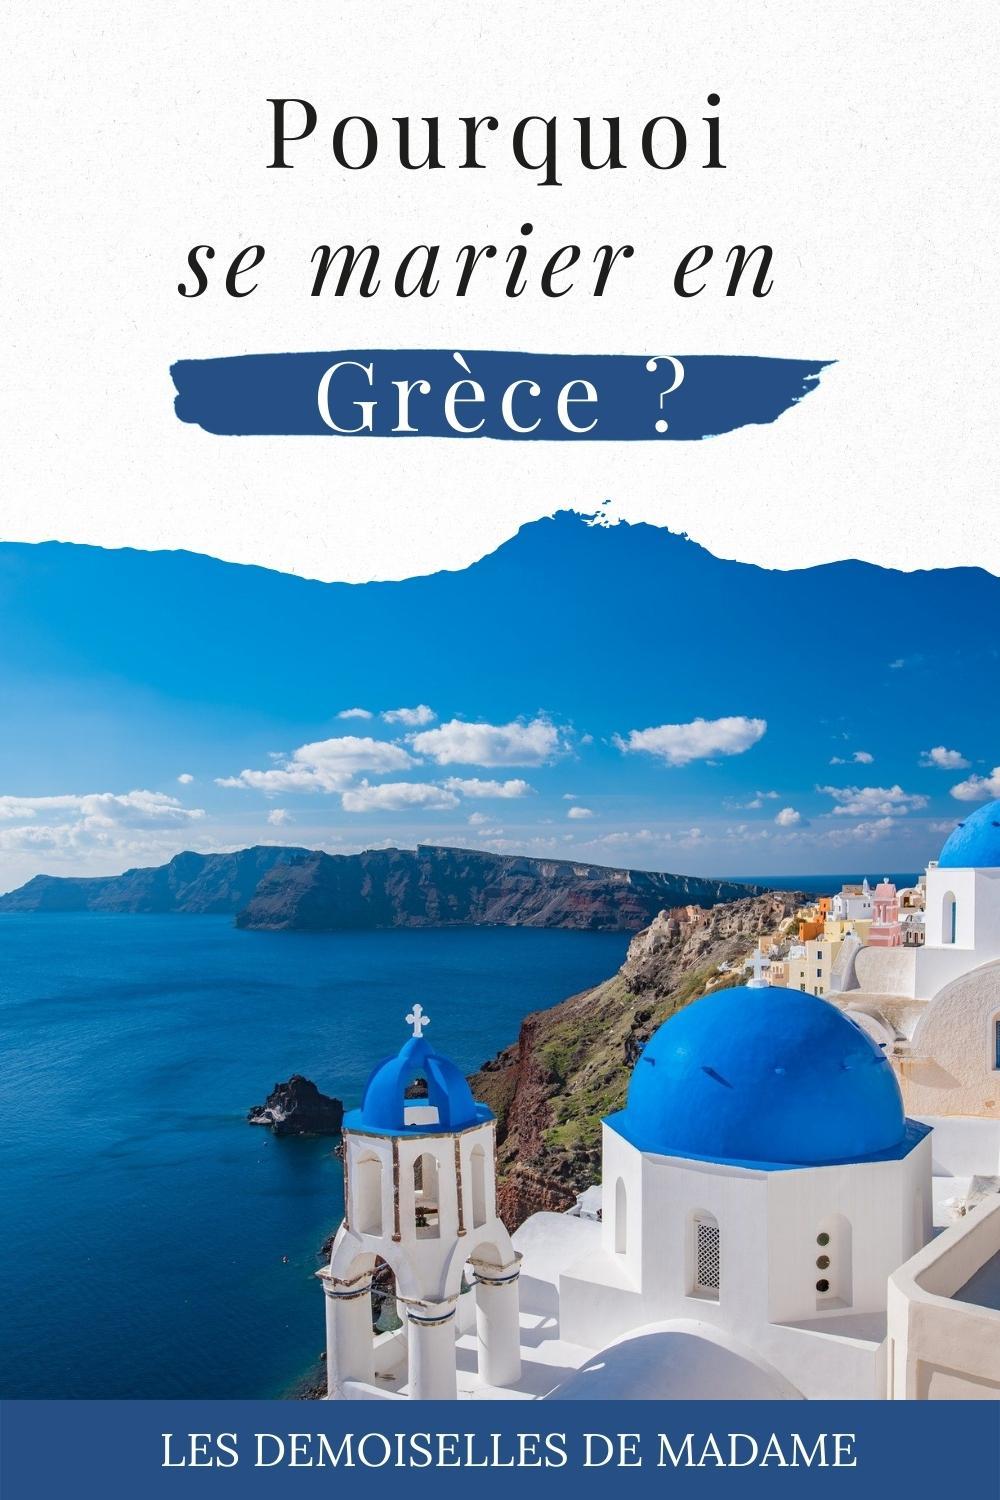 Mariage en grece wedding planner